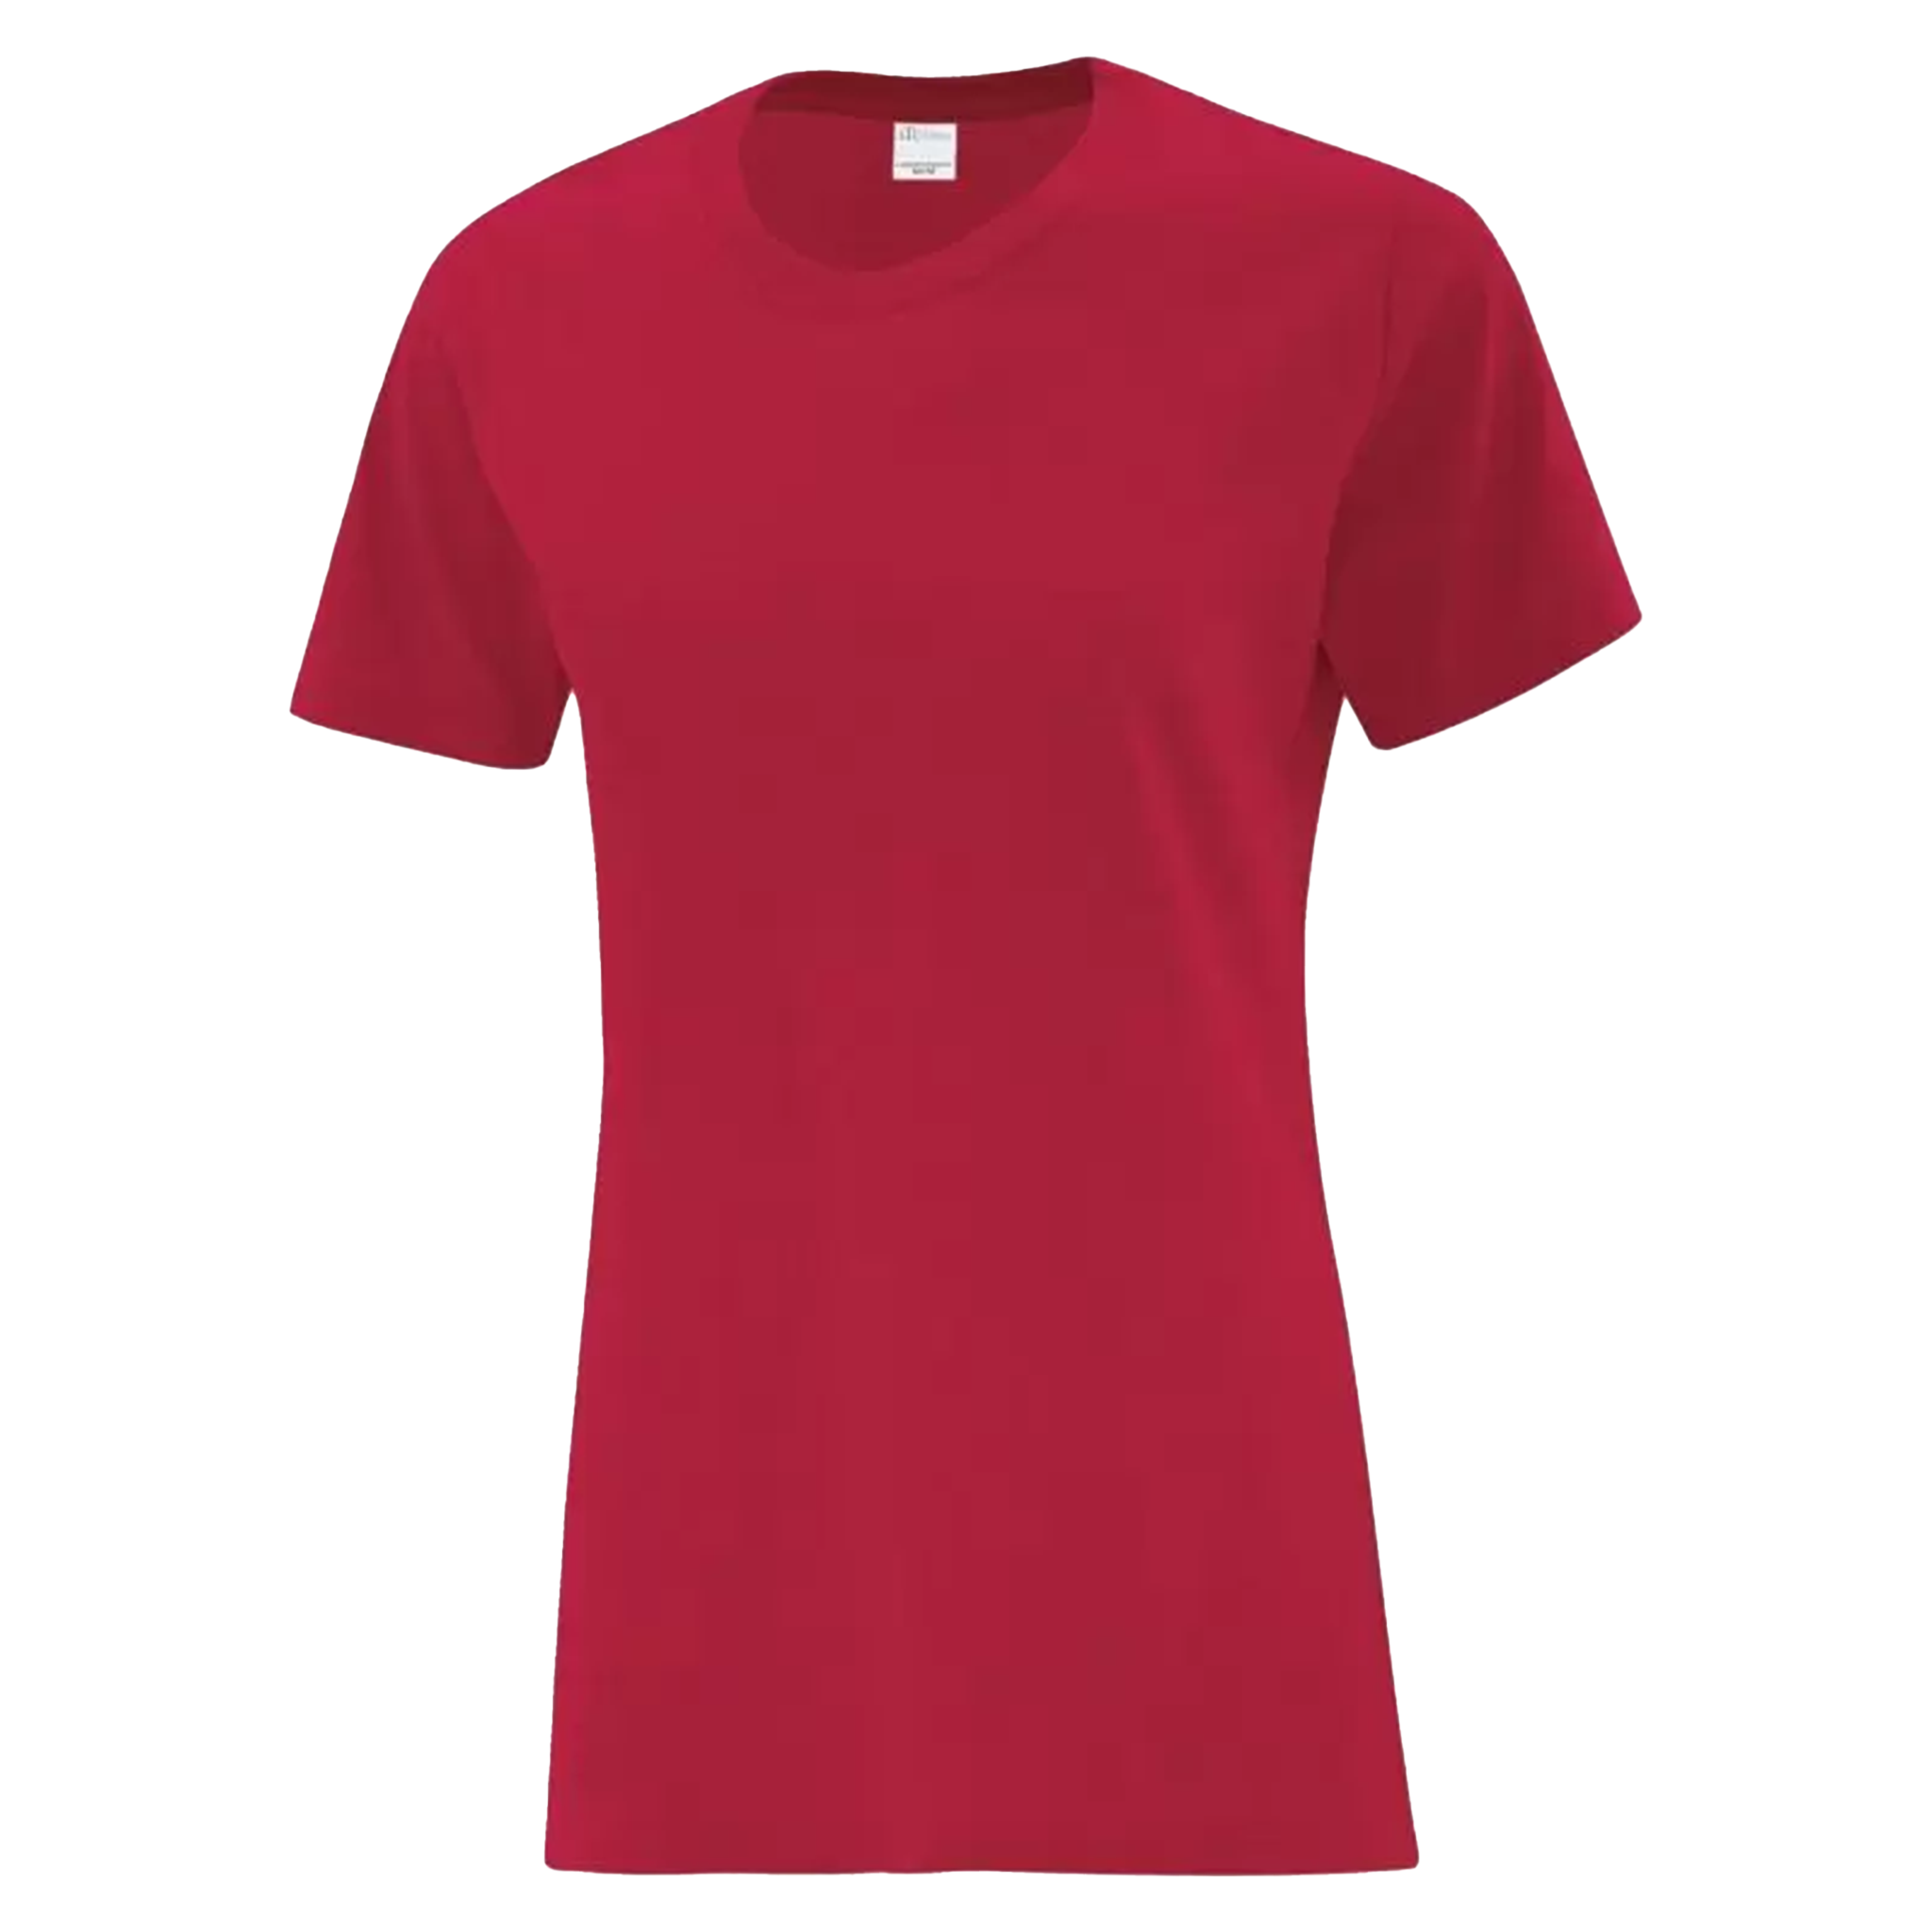 ATC Everyday Cotton T-Shirt - Women's Sizing XS-4XL - Red